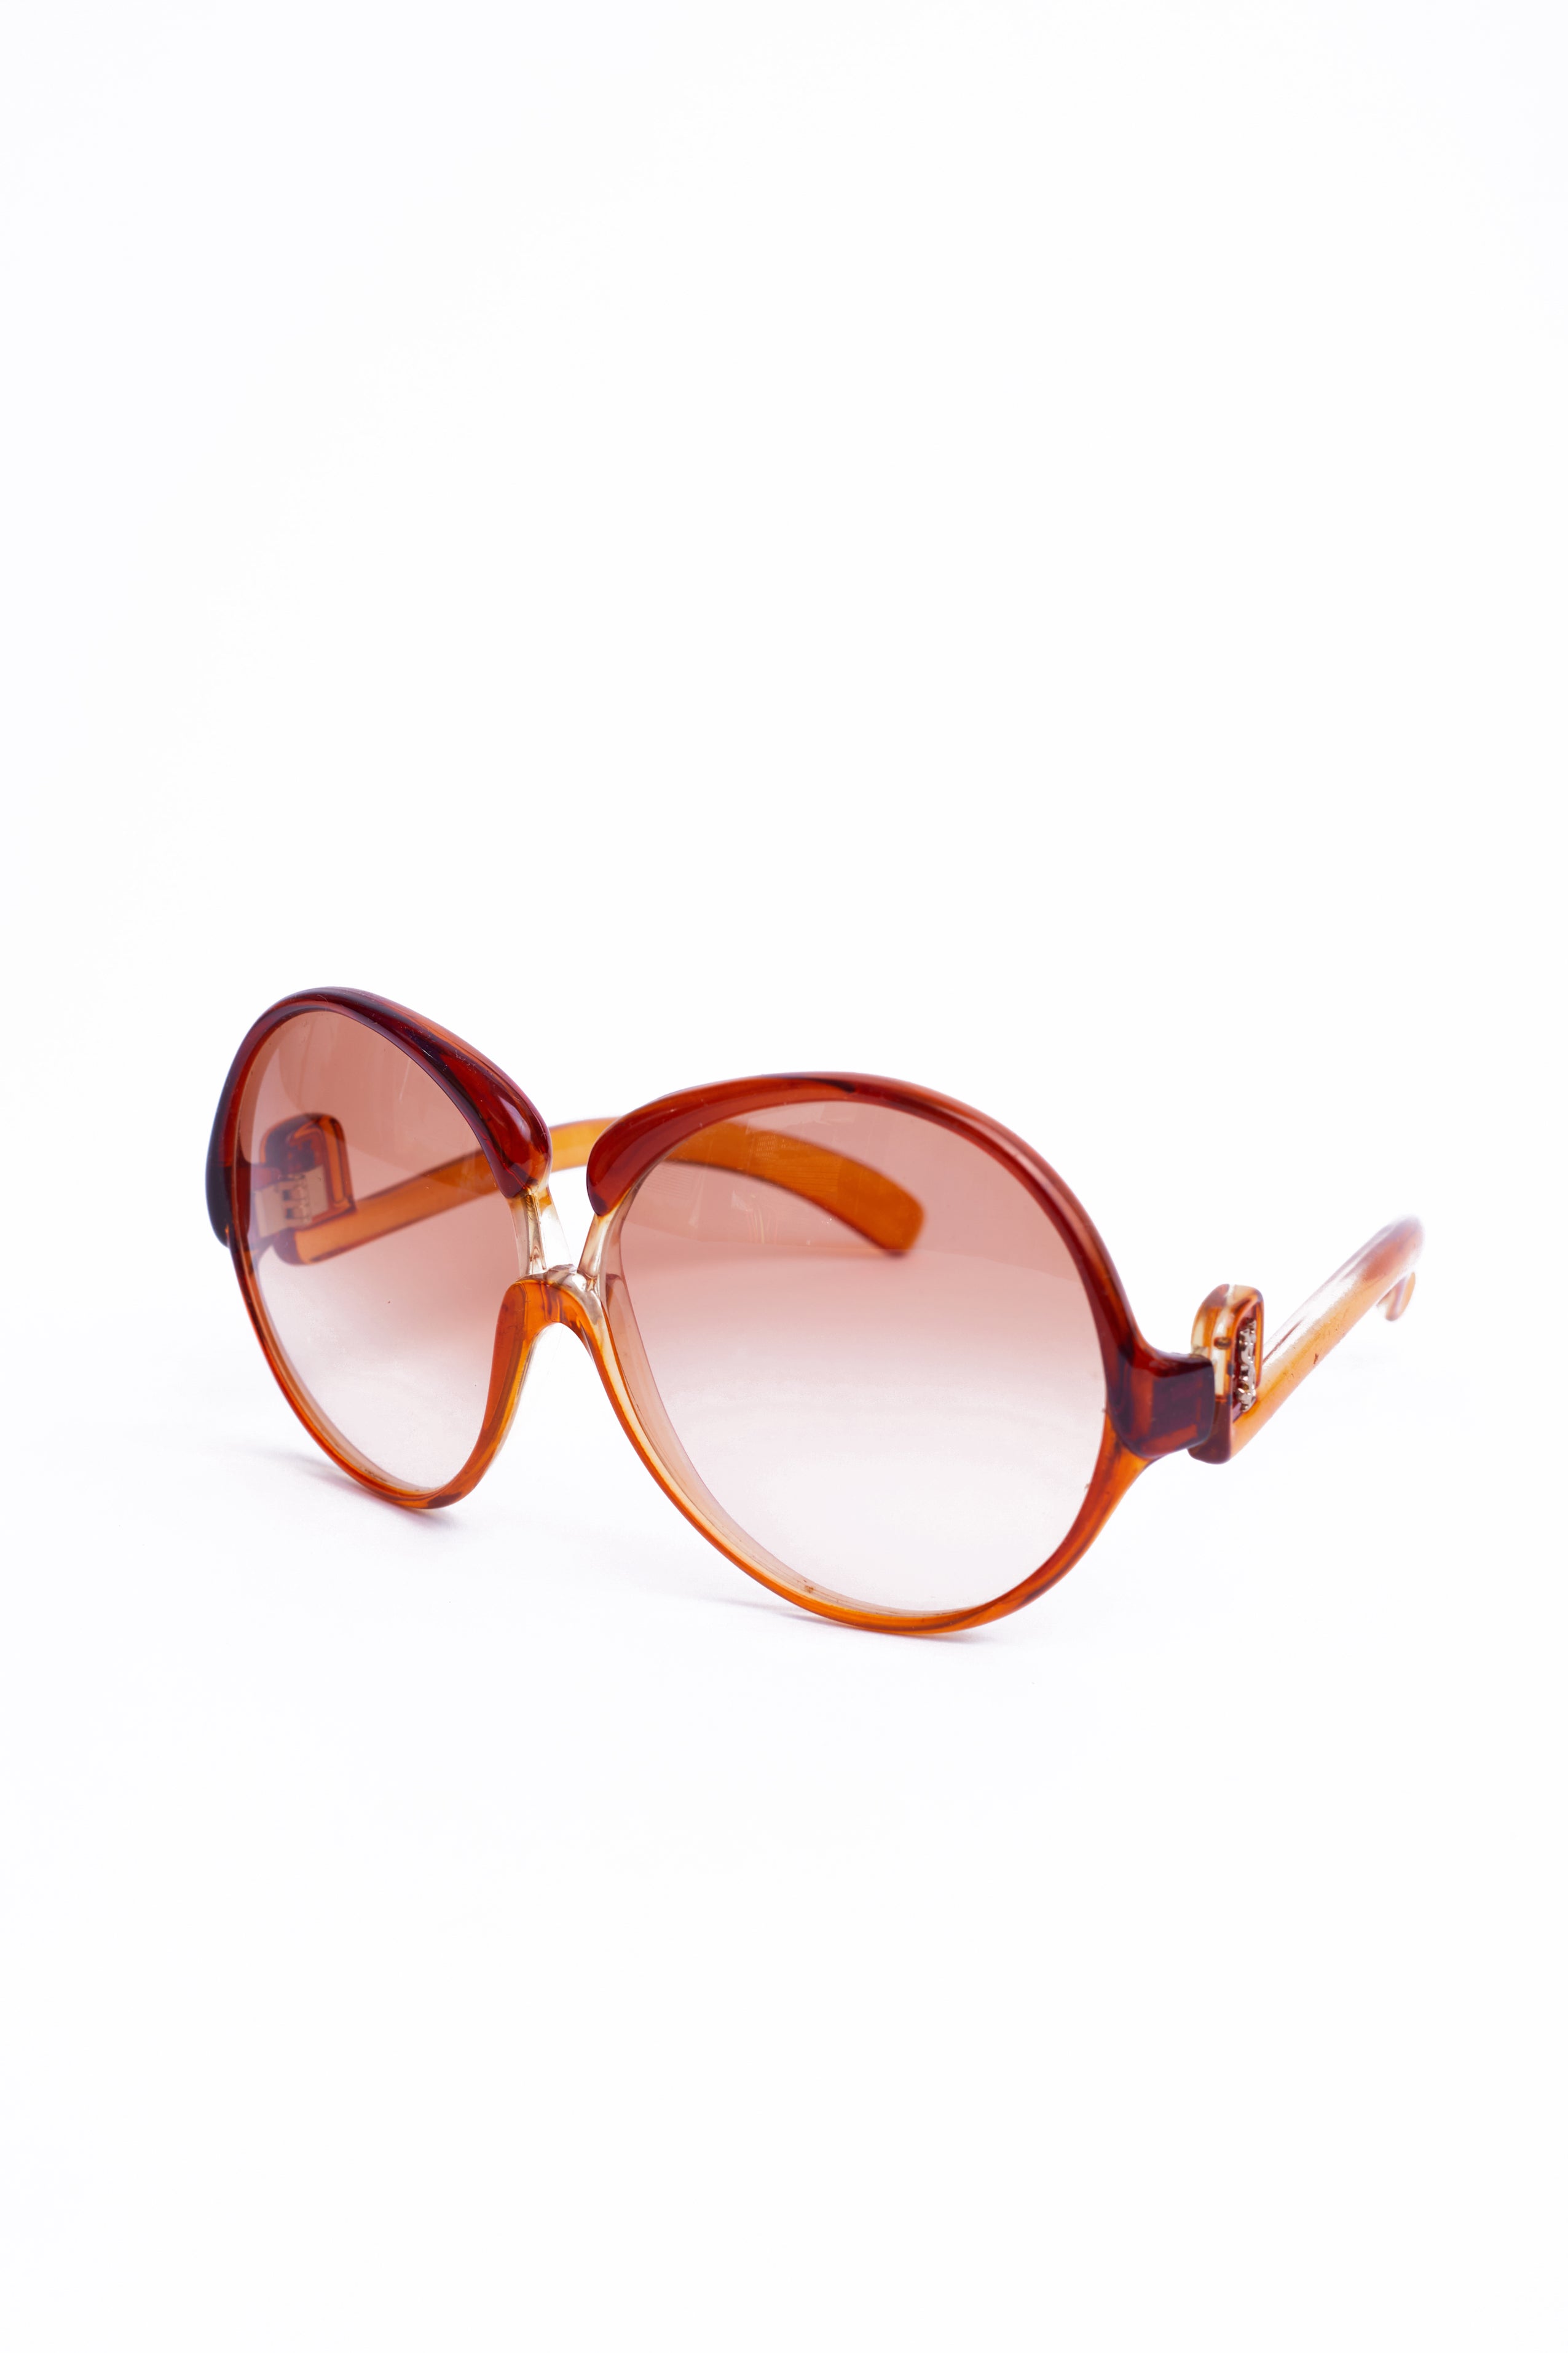 Yves Saint Laurent <br> S/S 1978 deadstock oversized peach and mahogany frame YSL logo arm sunglasses 7773